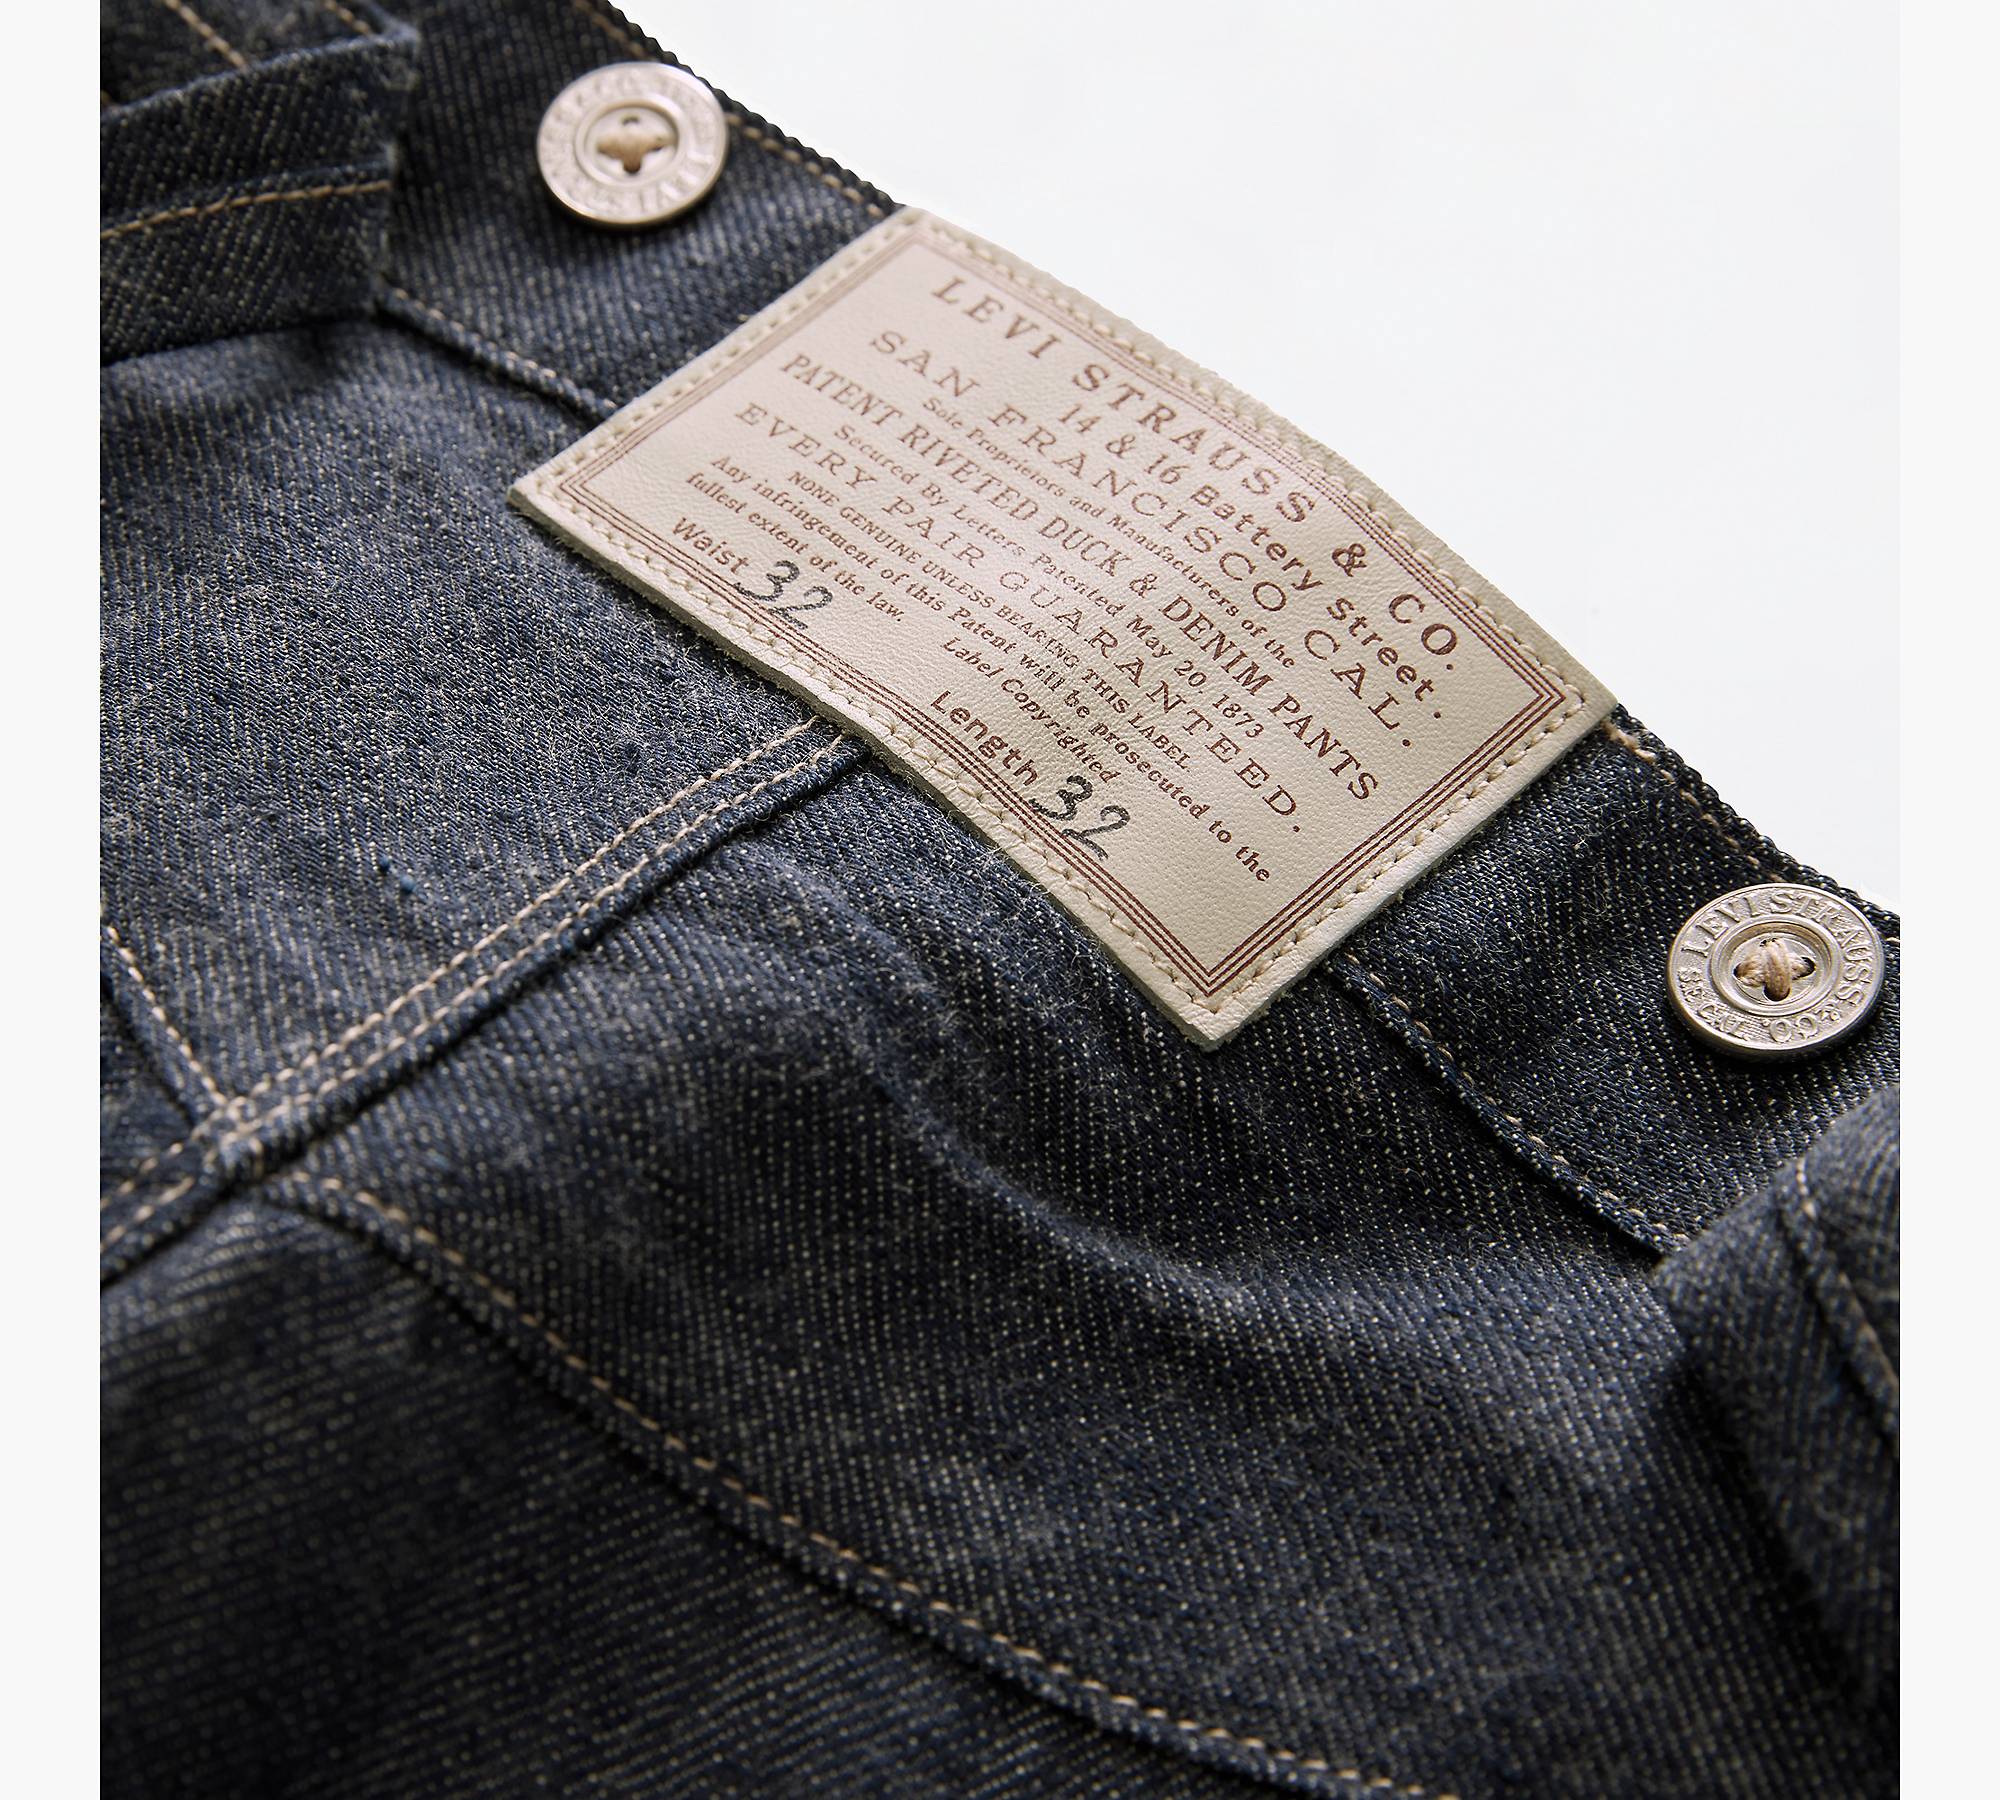 Levi's jeans leather label close up